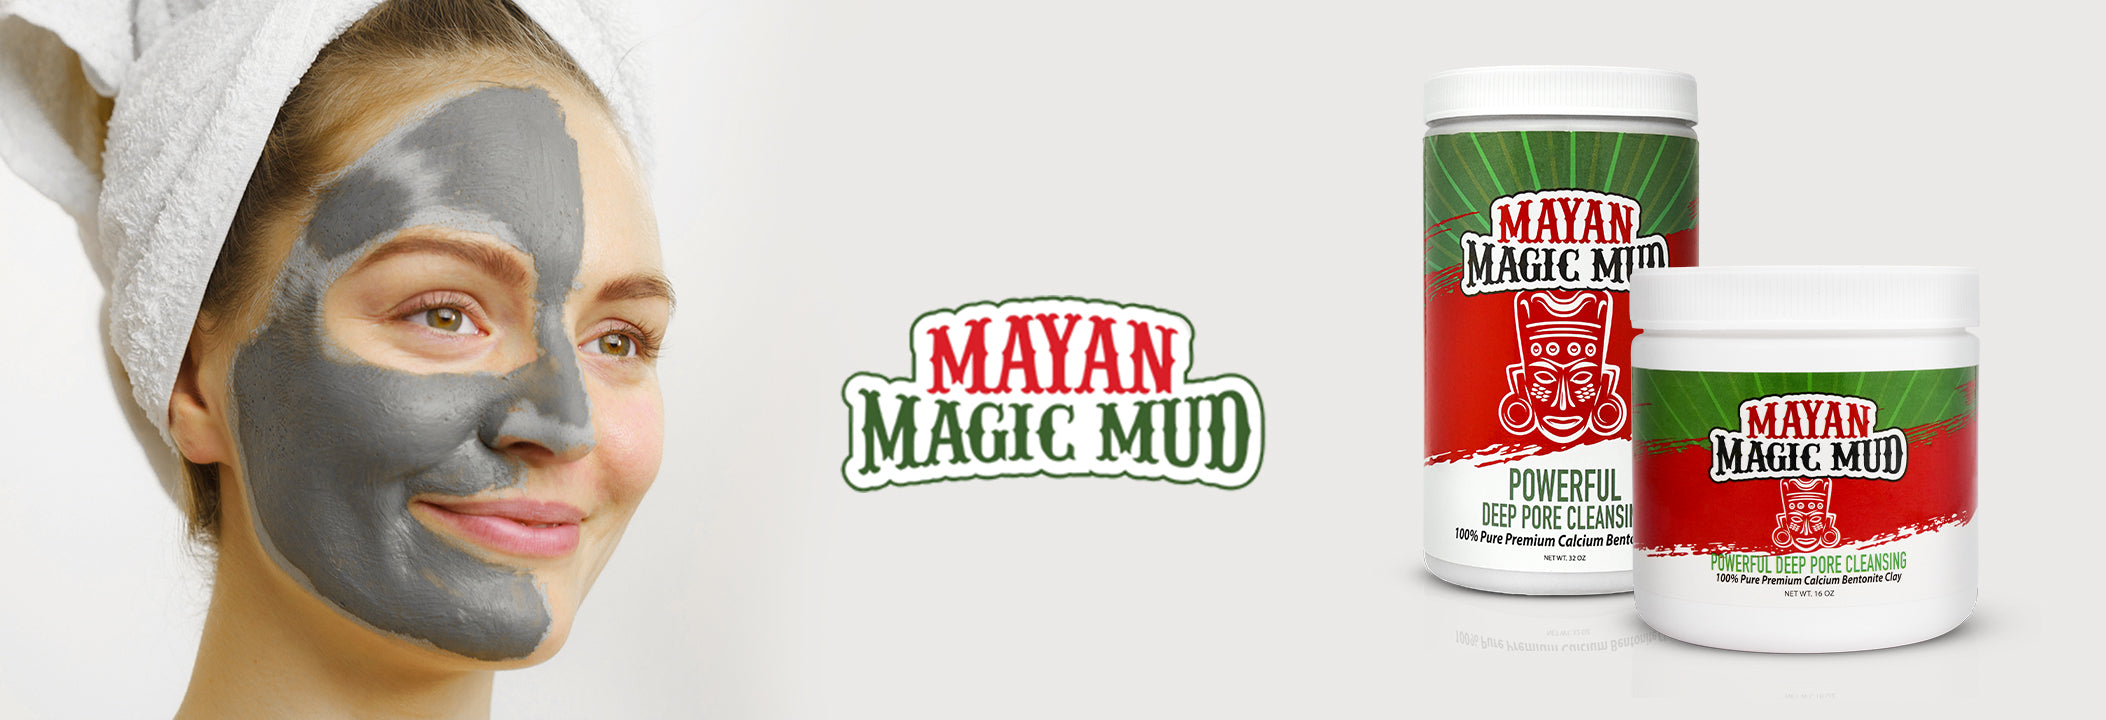 mayan magic mud